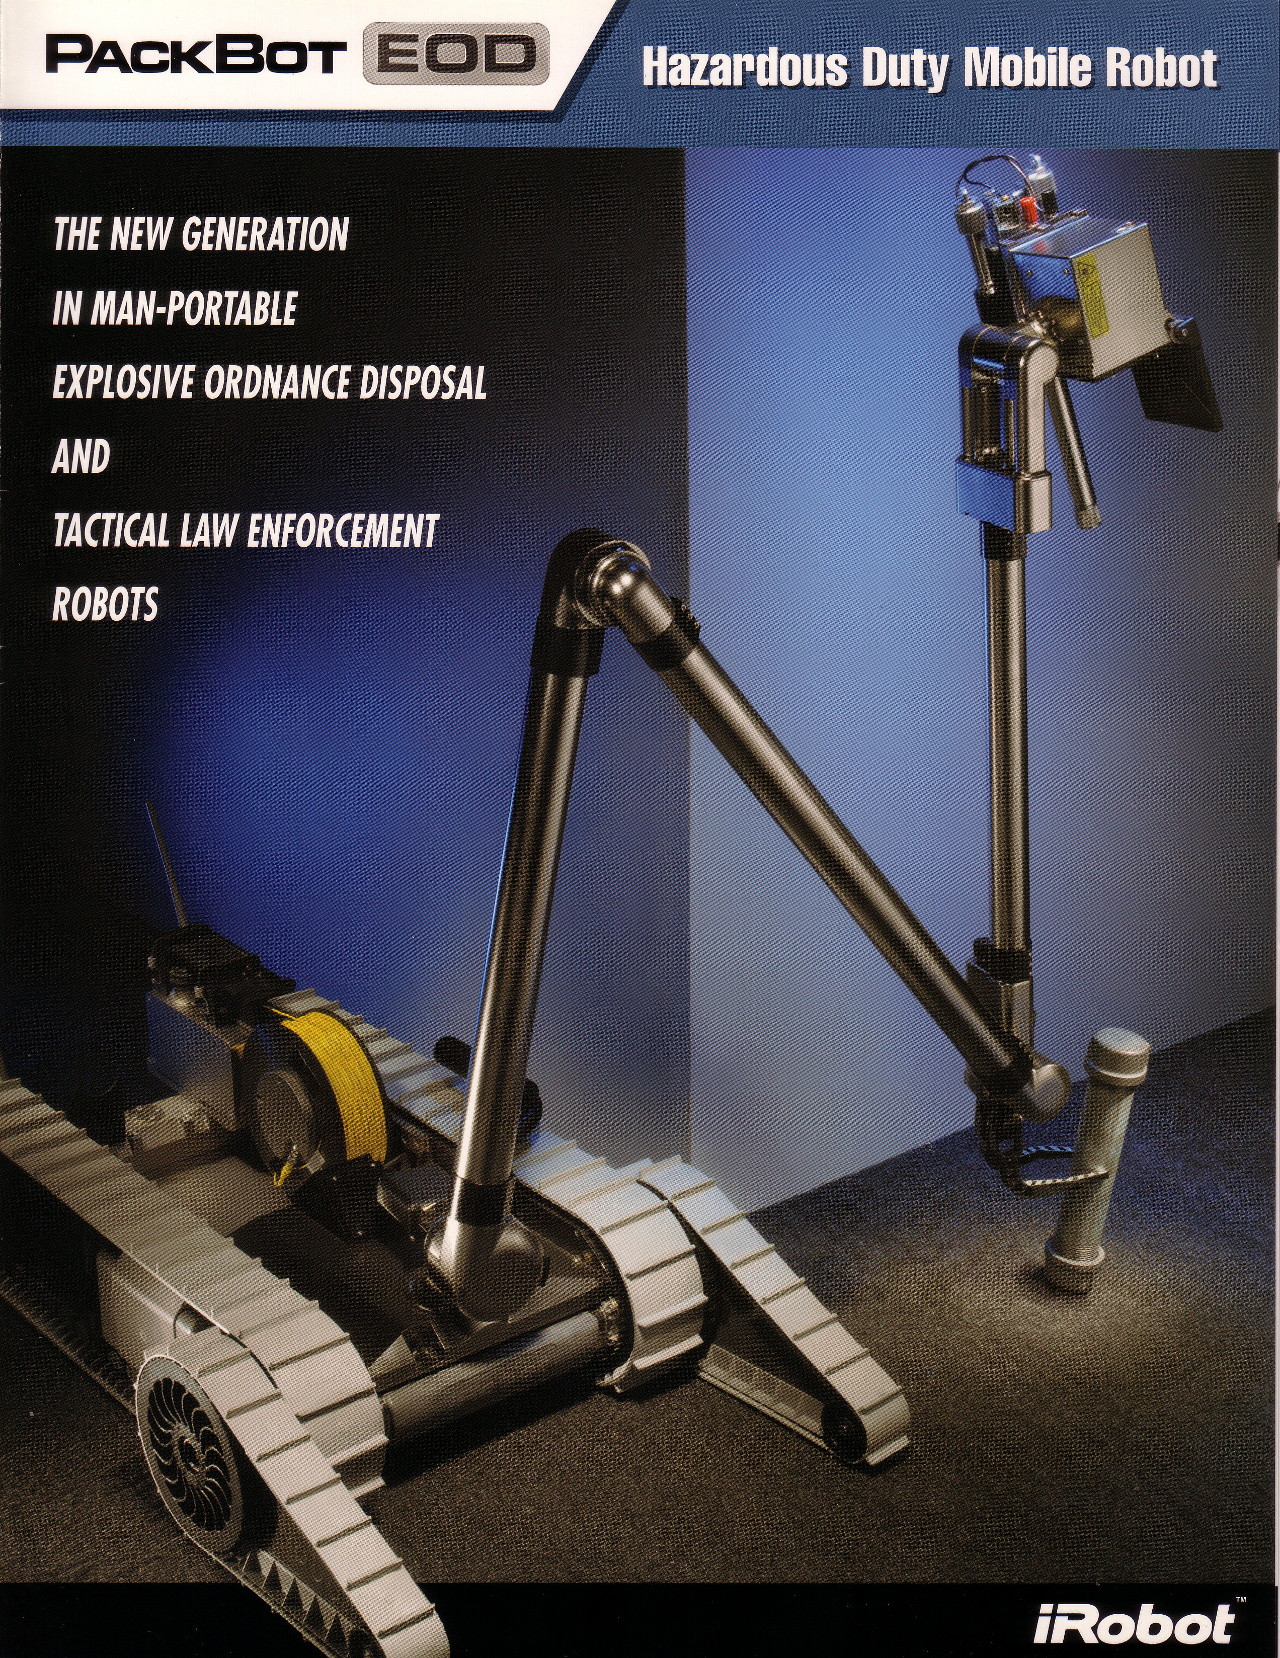 Development of control electronics for various iRobot robots, including PackBot